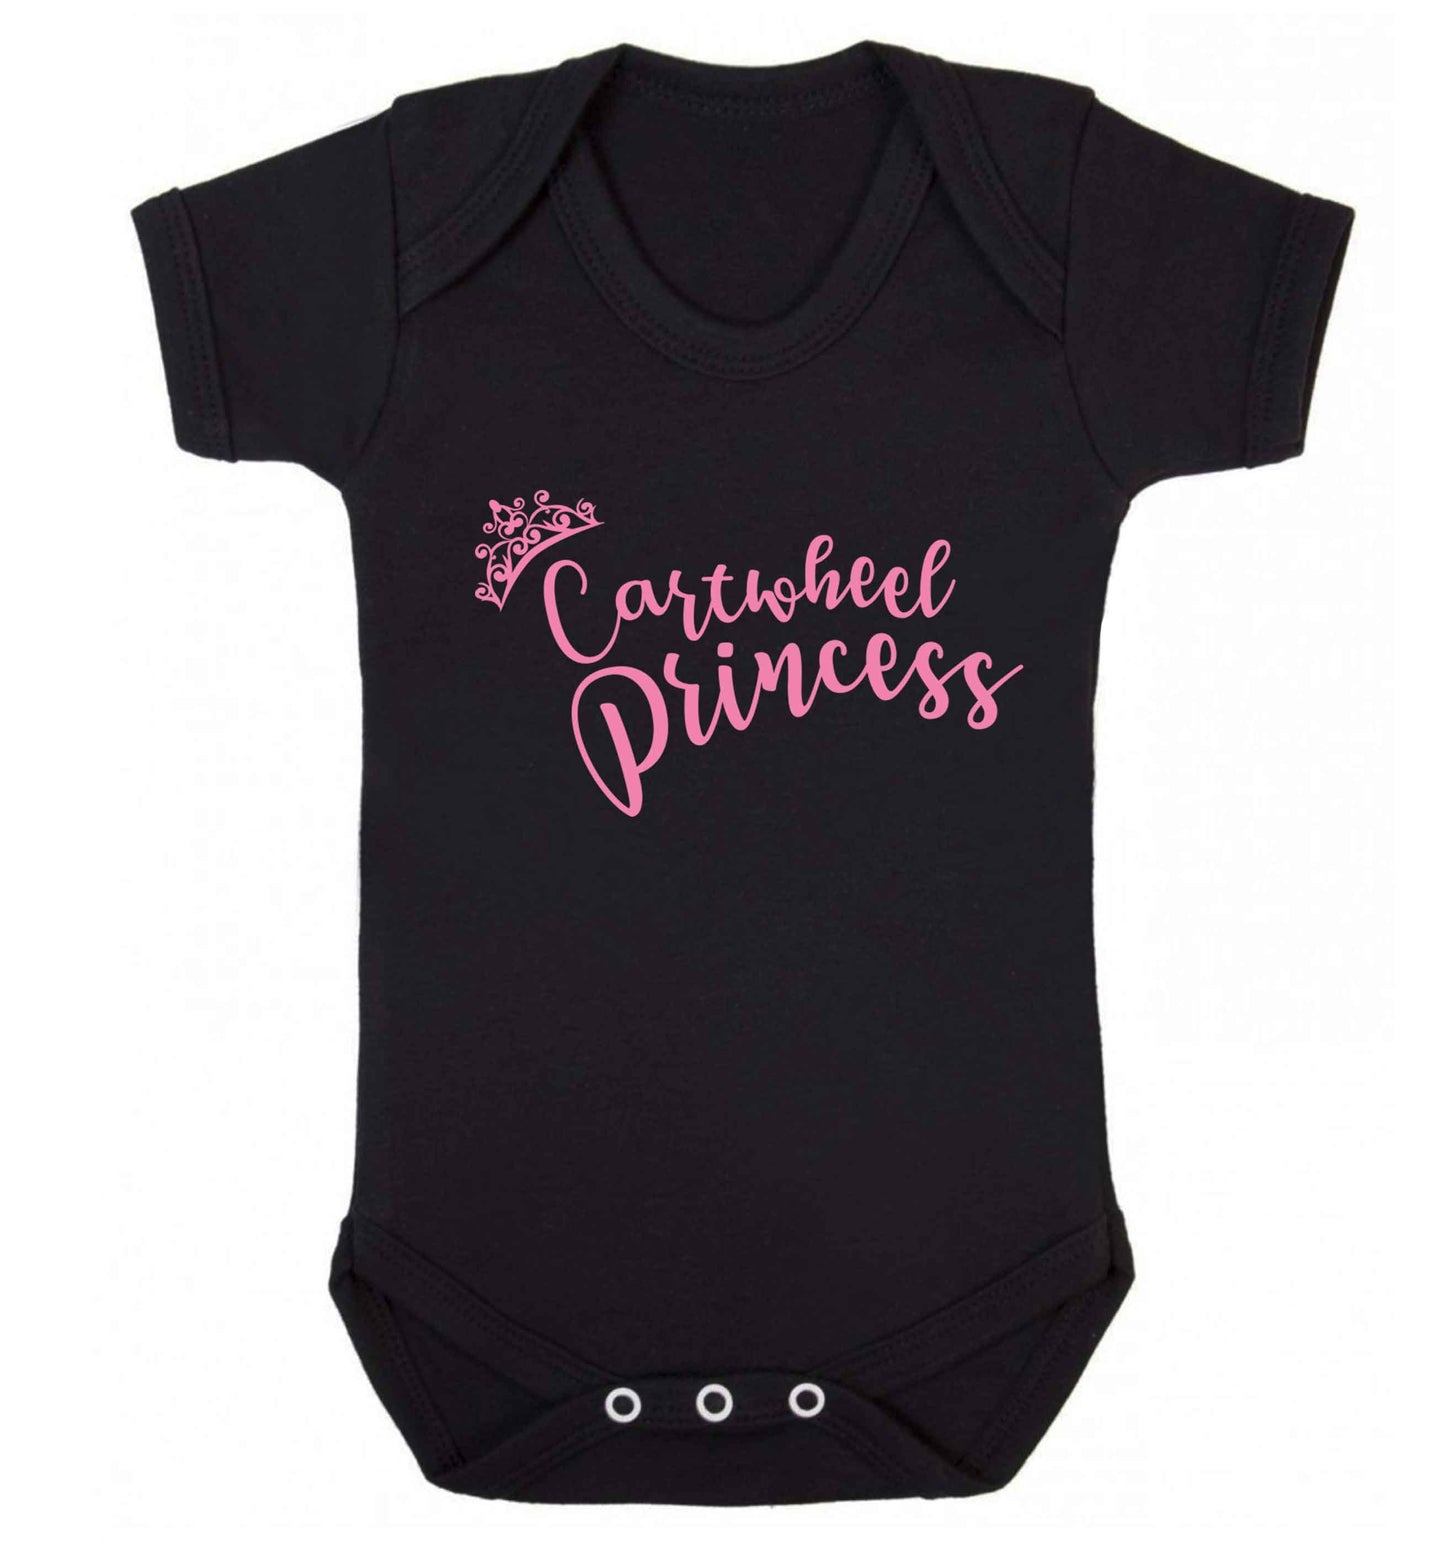 Cartwheel princess Baby Vest black 18-24 months